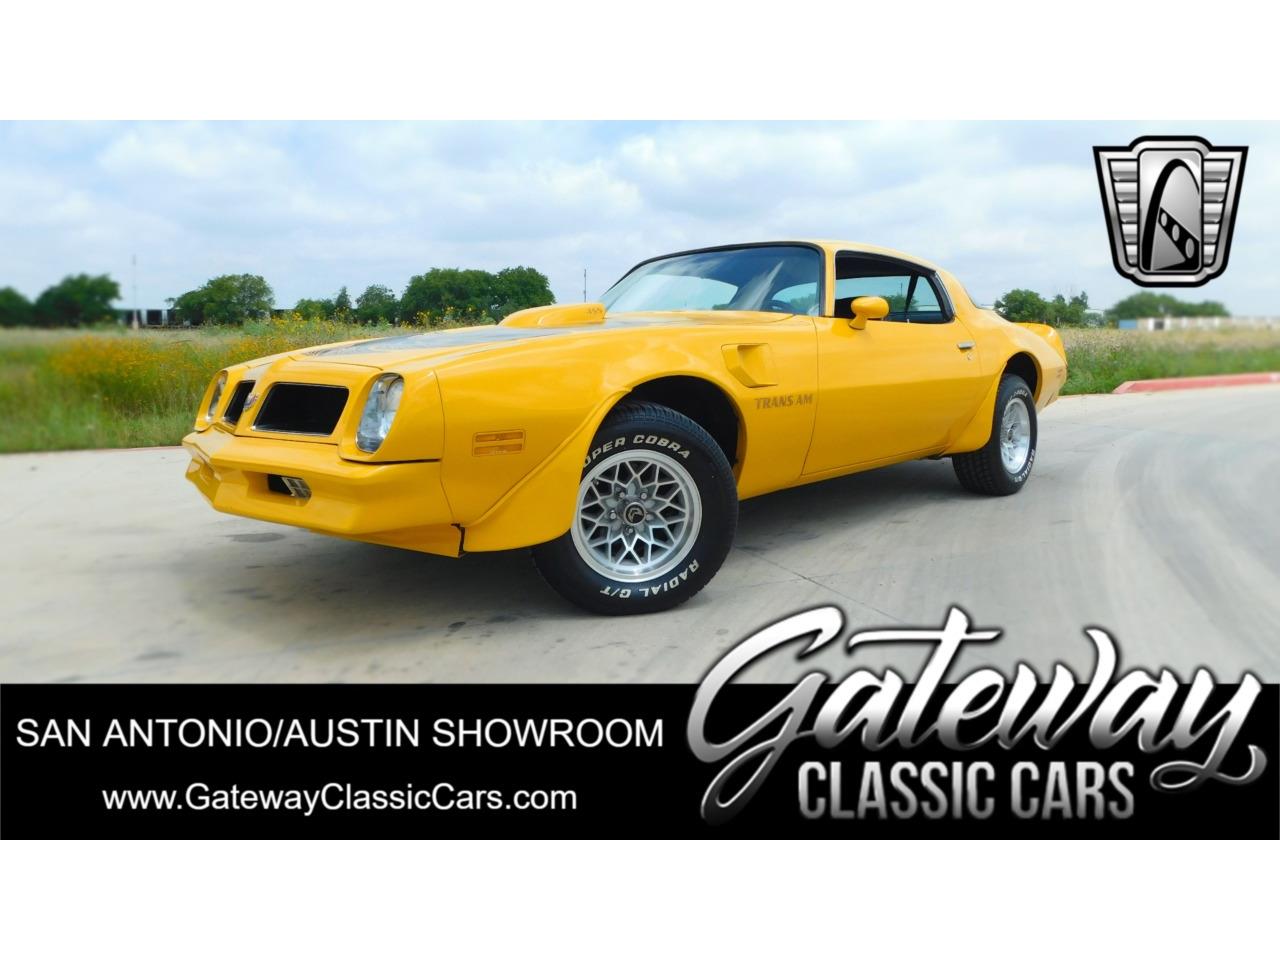 For Sale: 1976 Pontiac Firebird in O'Fallon, Illinois for sale in O Fallon, IL